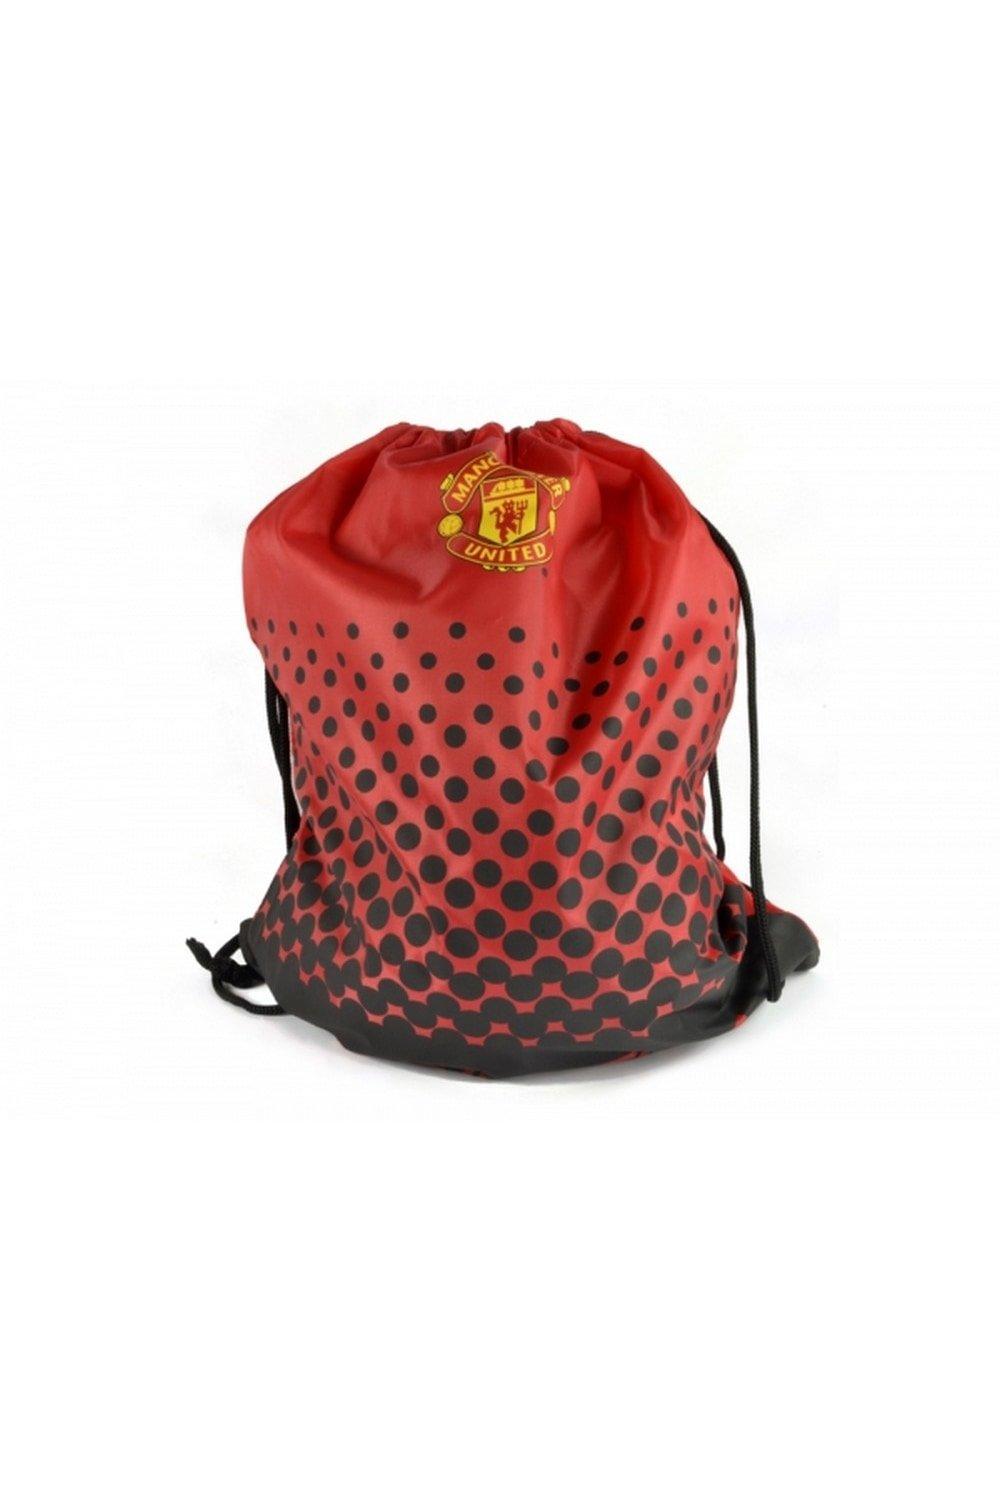 цена Спортивная сумка Манчестер Юнайтед Manchester United FC, красный